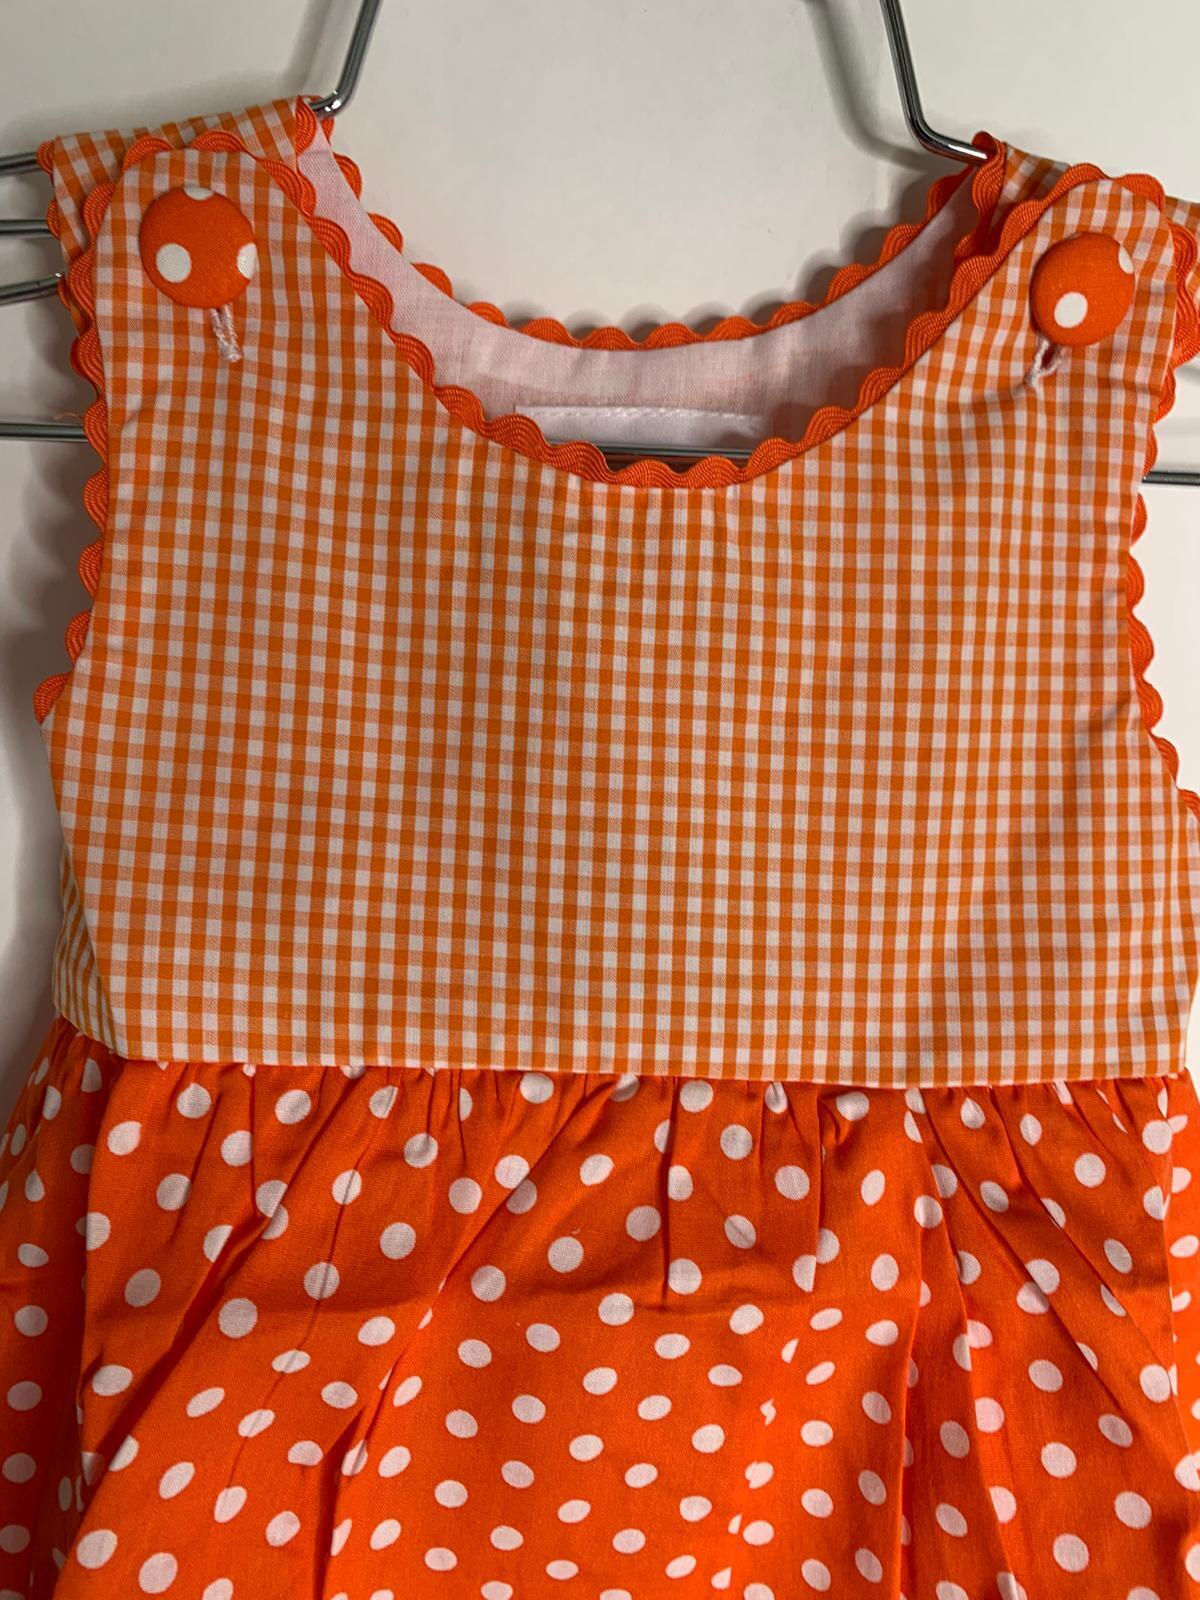 Lil Cactus Girls 3-6M Autumn Orange Gingham Plaid Polka Dot A Line Dress